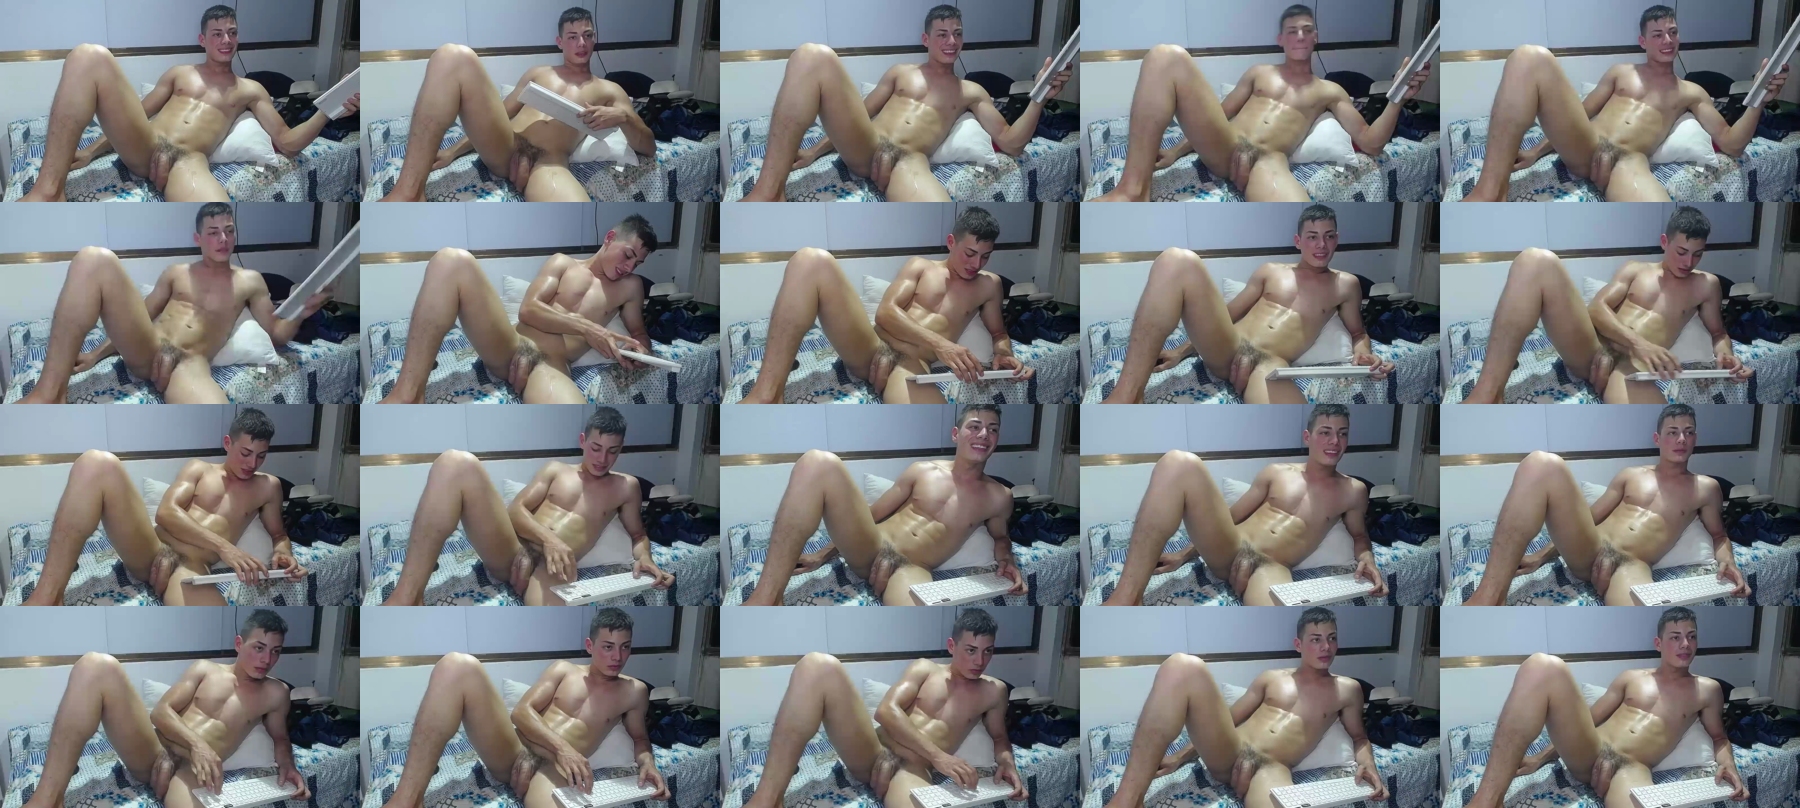 Nick_Zackk  06-08-2021 Male Nude